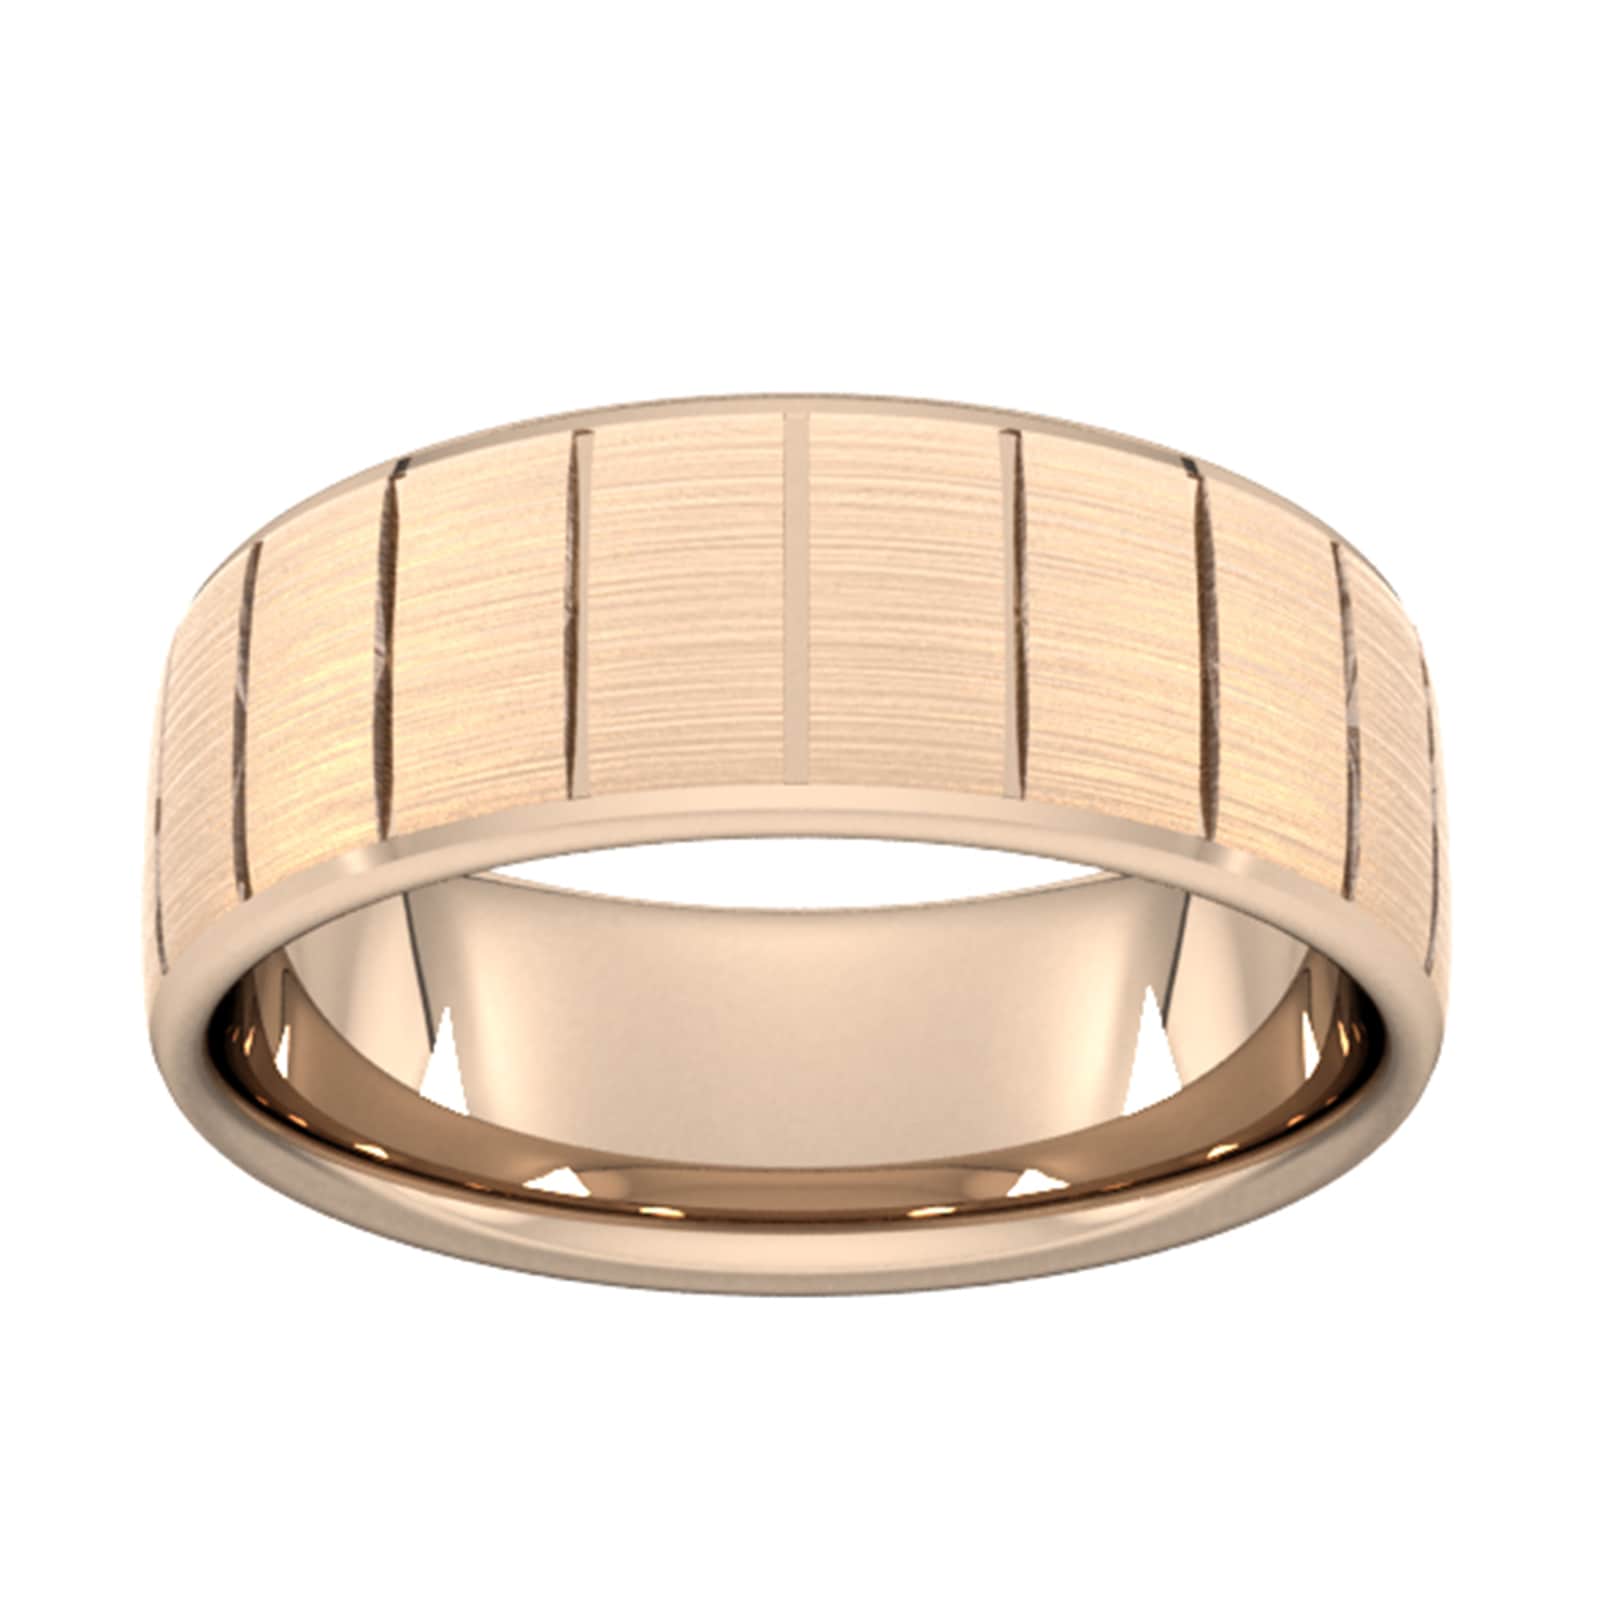 8mm D Shape Standard Vertical Lines Wedding Ring In 9 Carat Rose Gold - Ring Size I